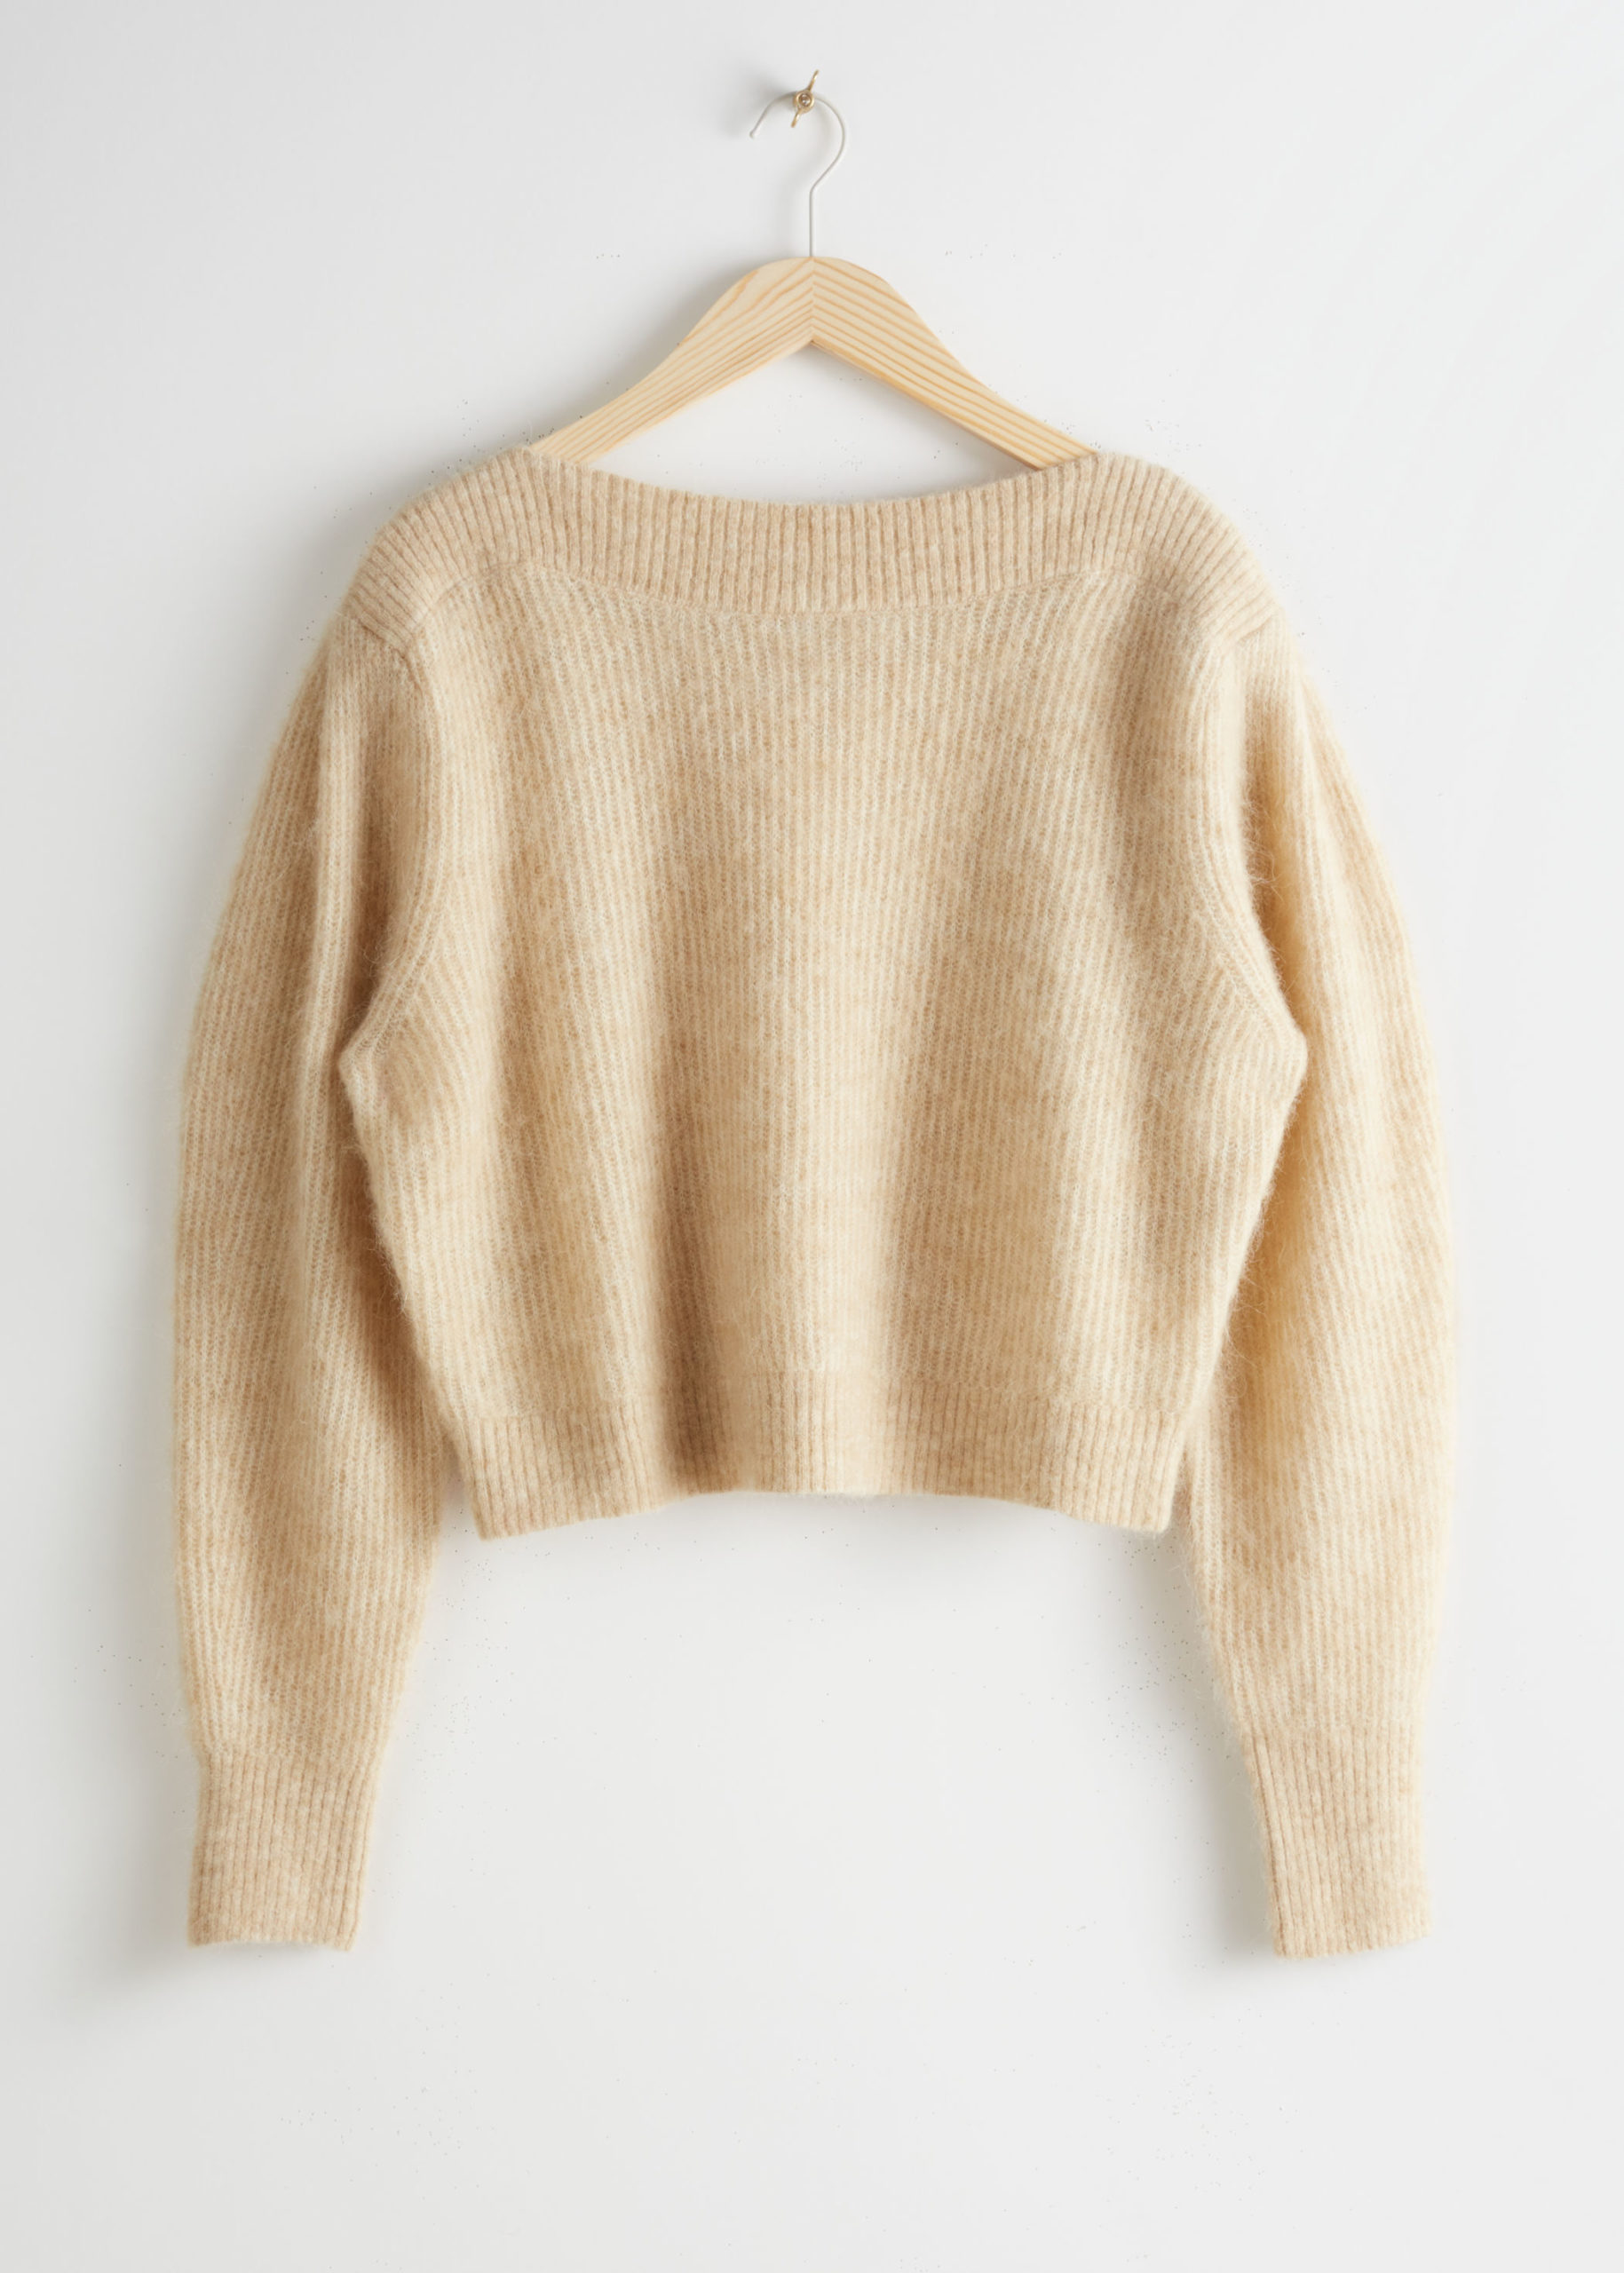 Tan Other Stories Sweater | Karina Style Diaries